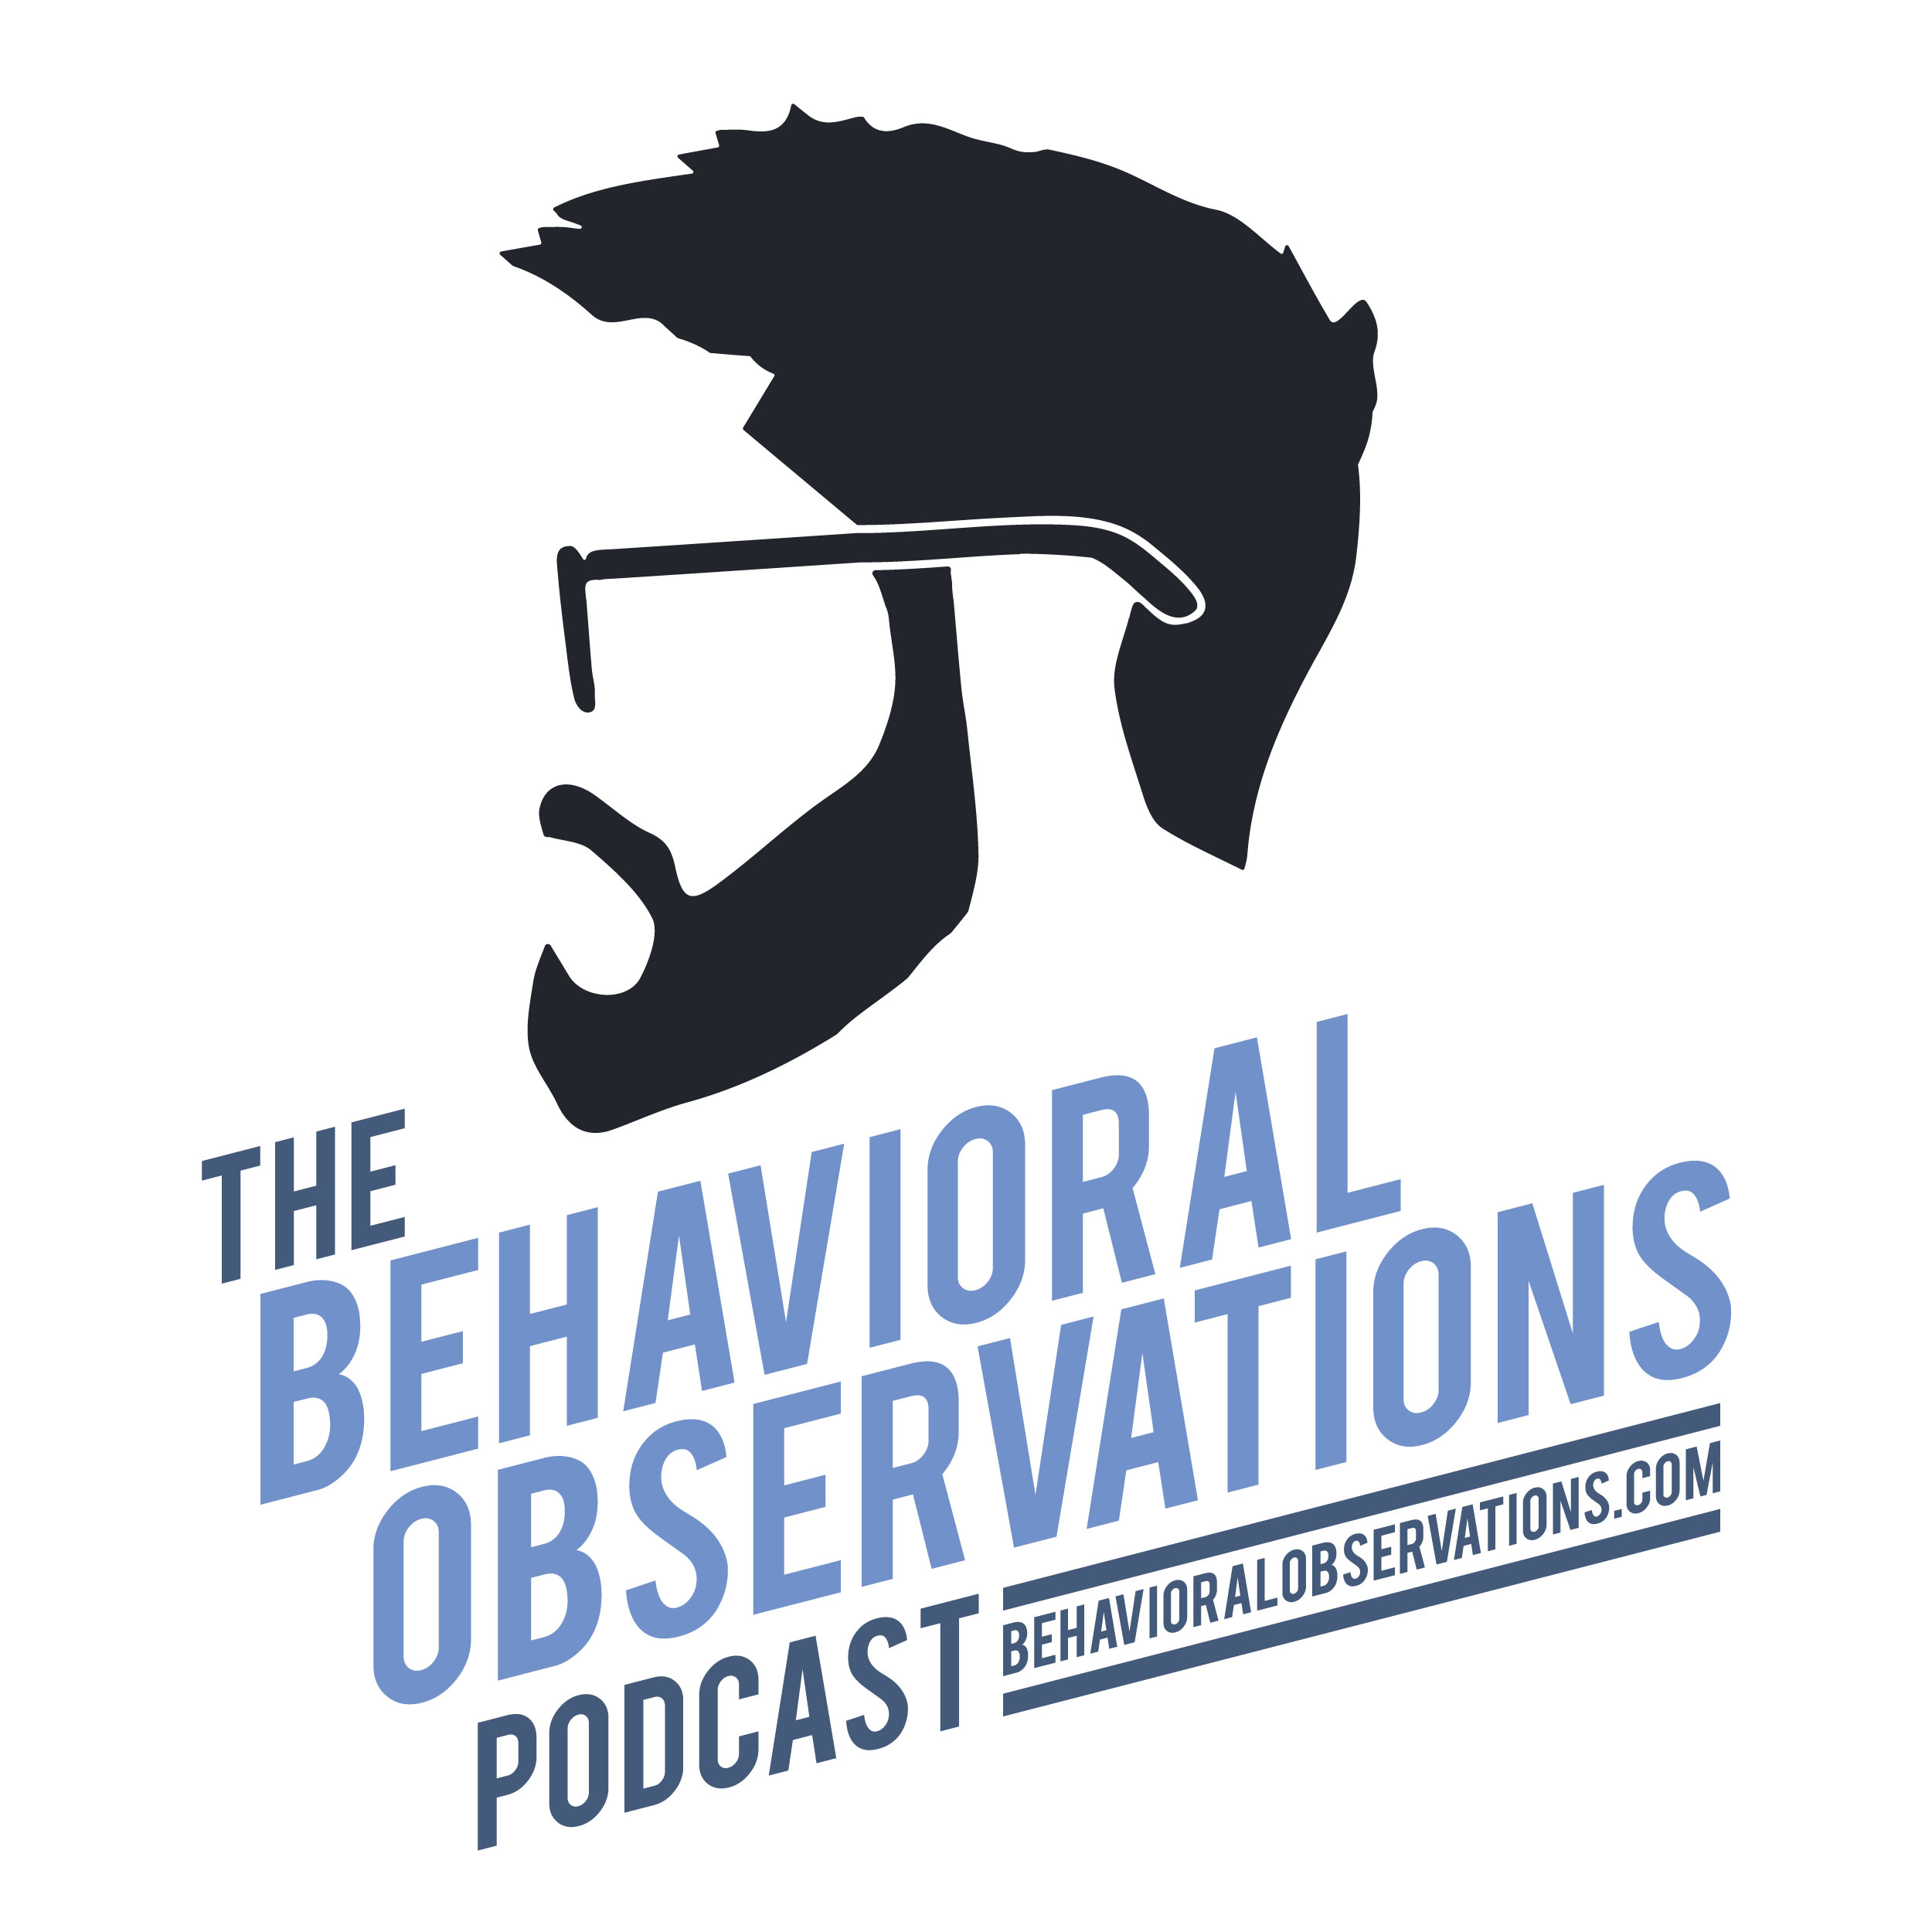 The Behavioral Observations podcast